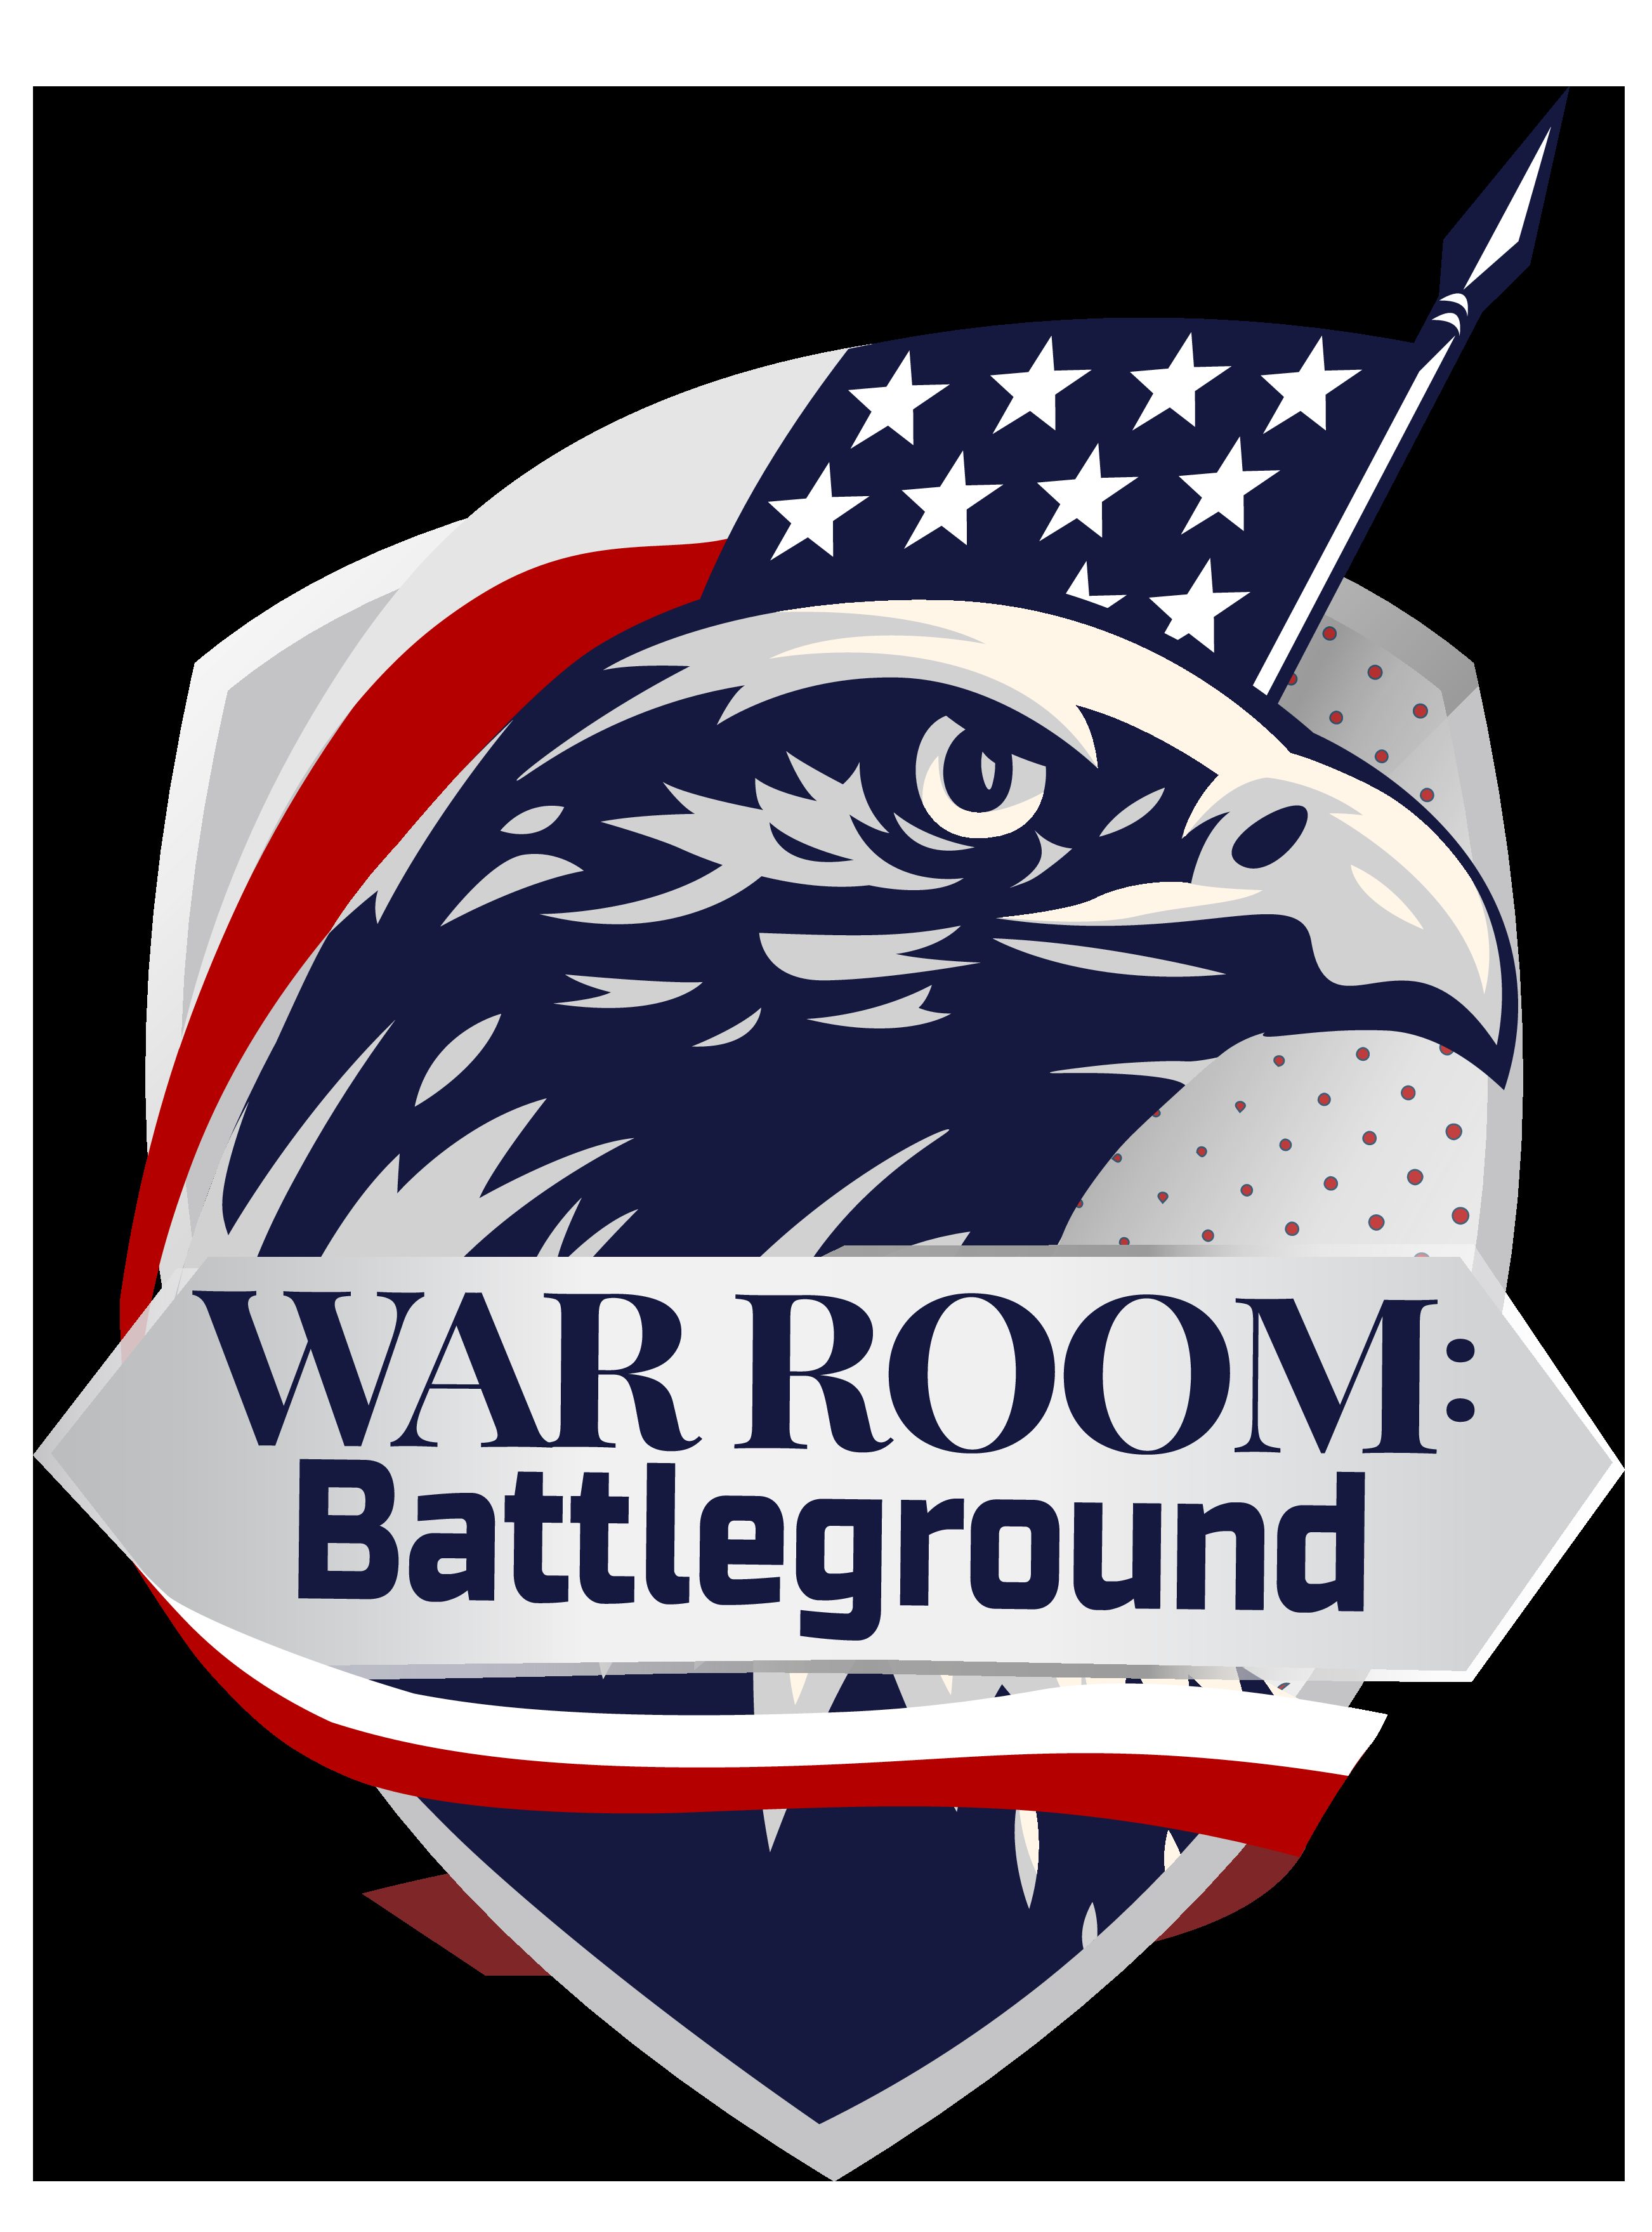 WarRoom Battleground EP 220: Big Tech Racing Towards Superhuman AI